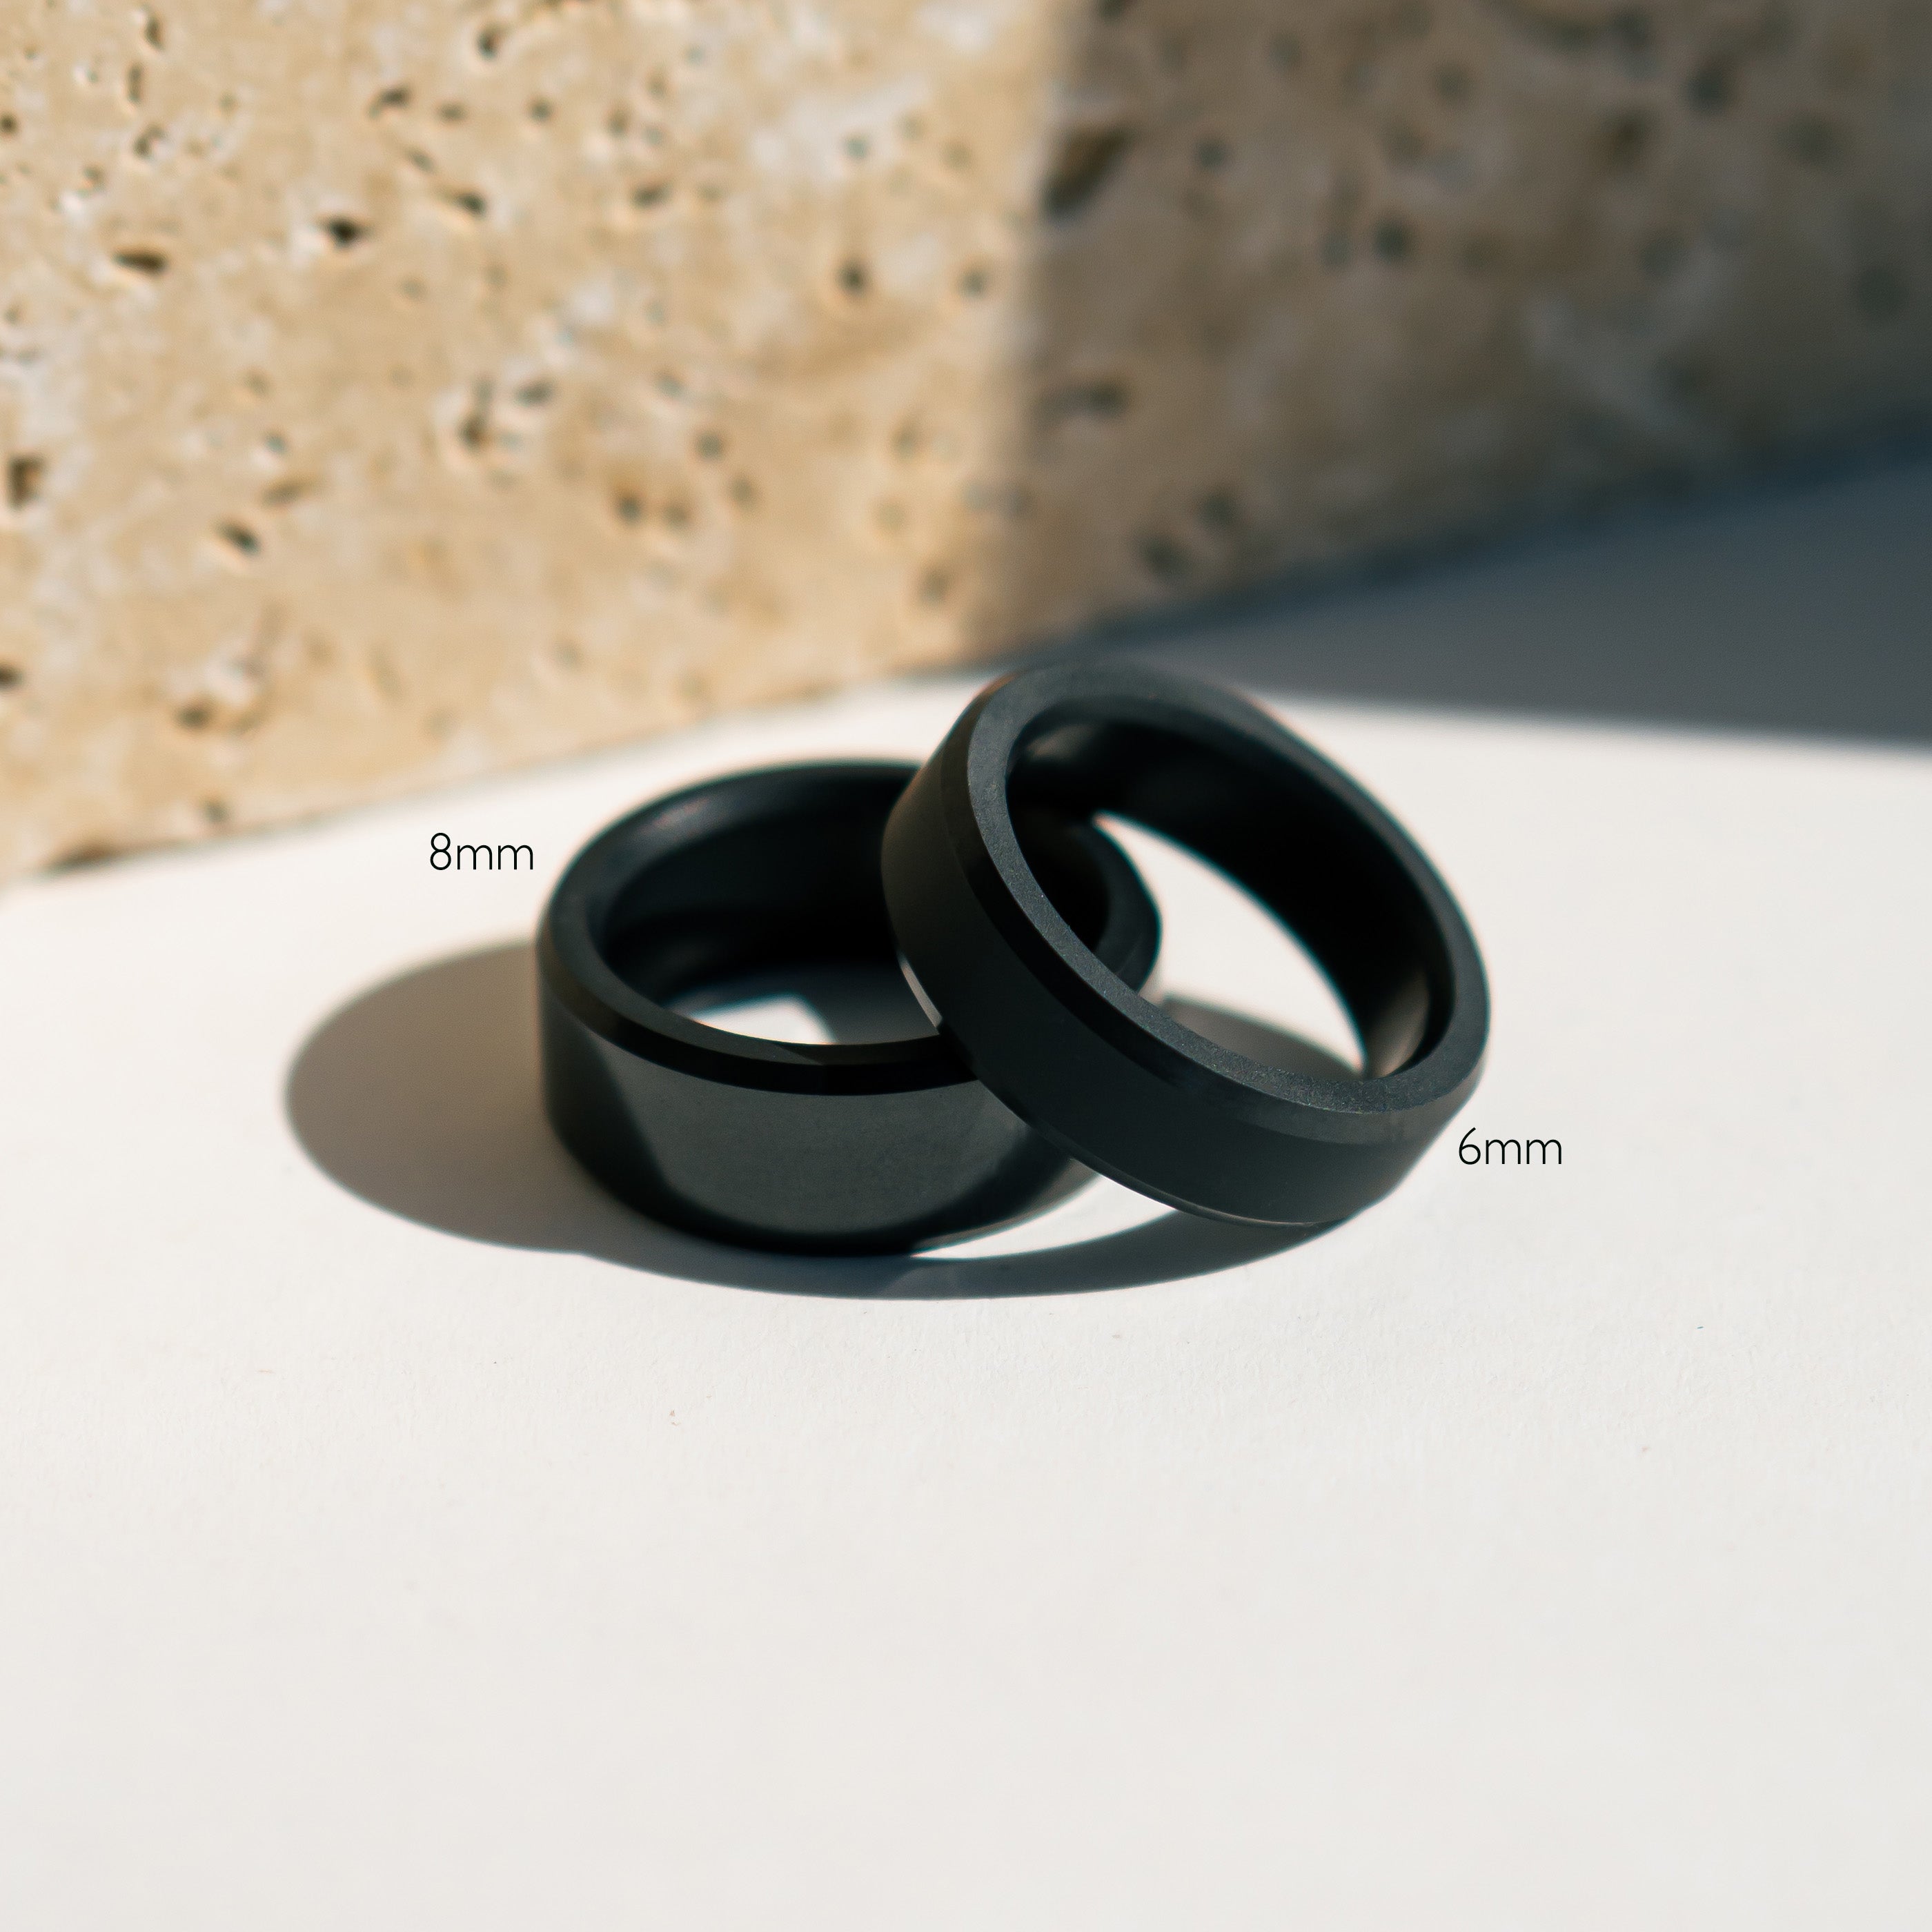 Black Diamond - Men’s Ring 6mm - ARES - Elysium Black Diamond